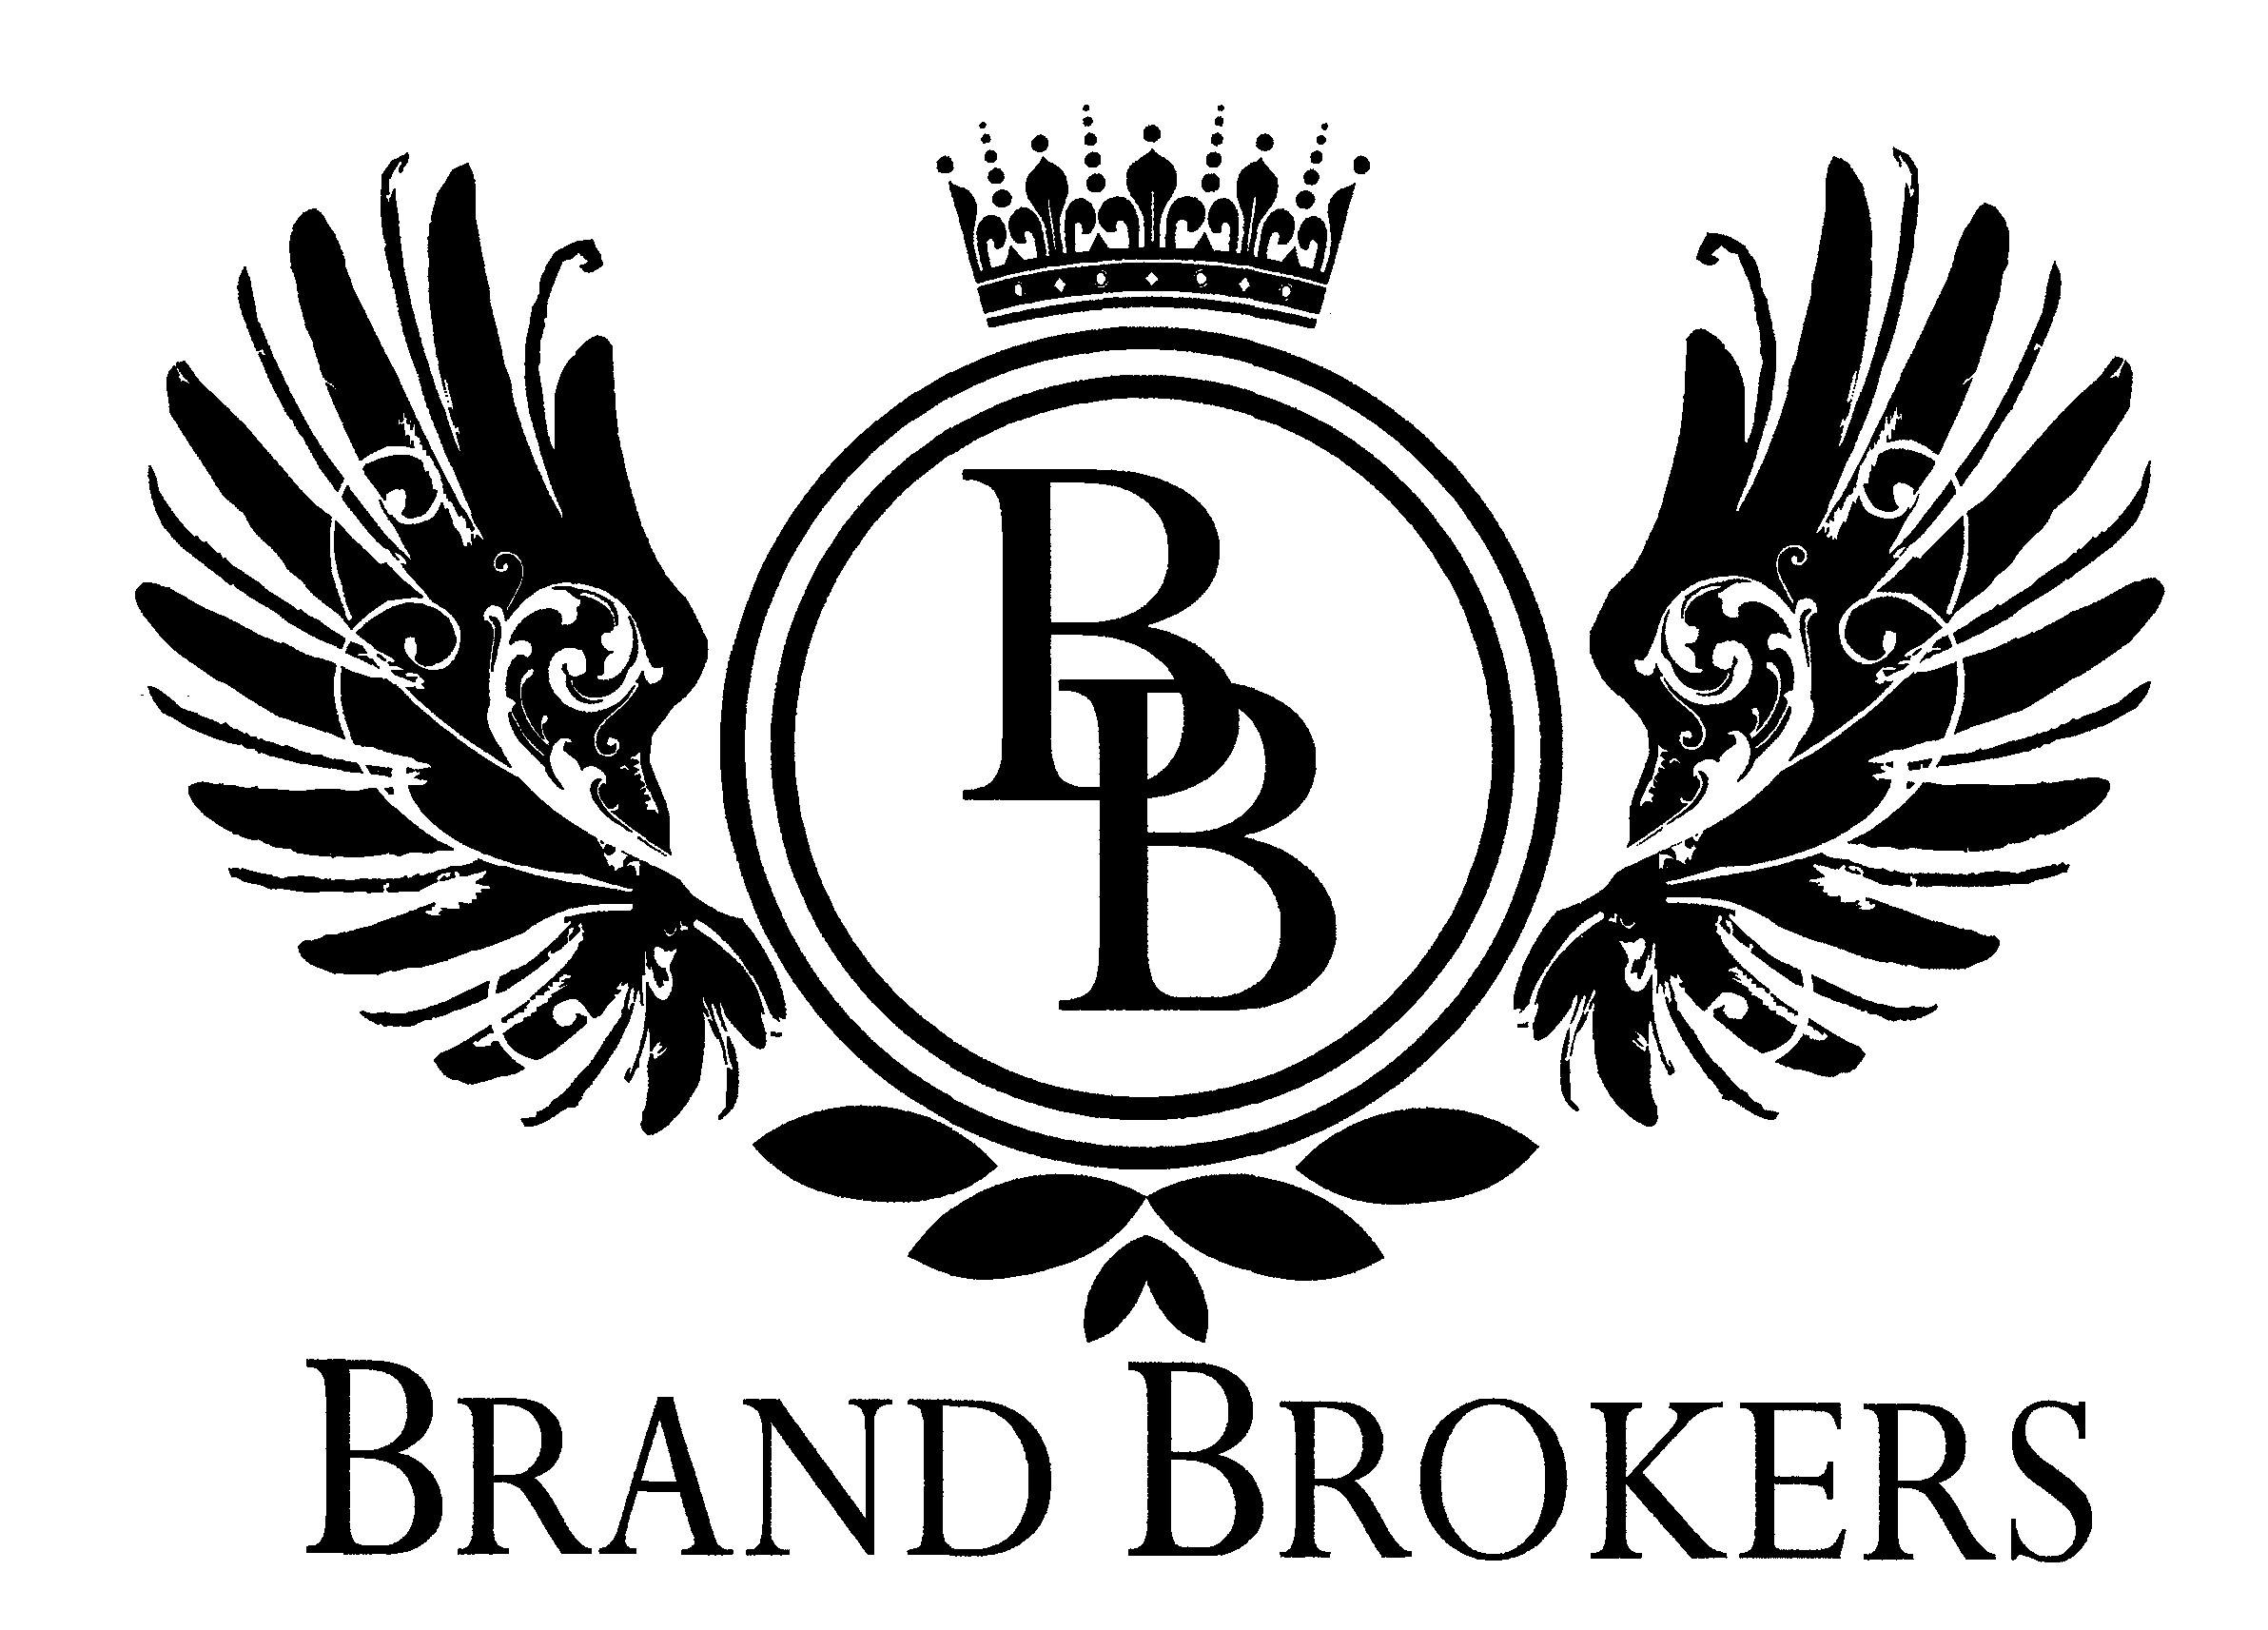  BB BRAND BROKERS